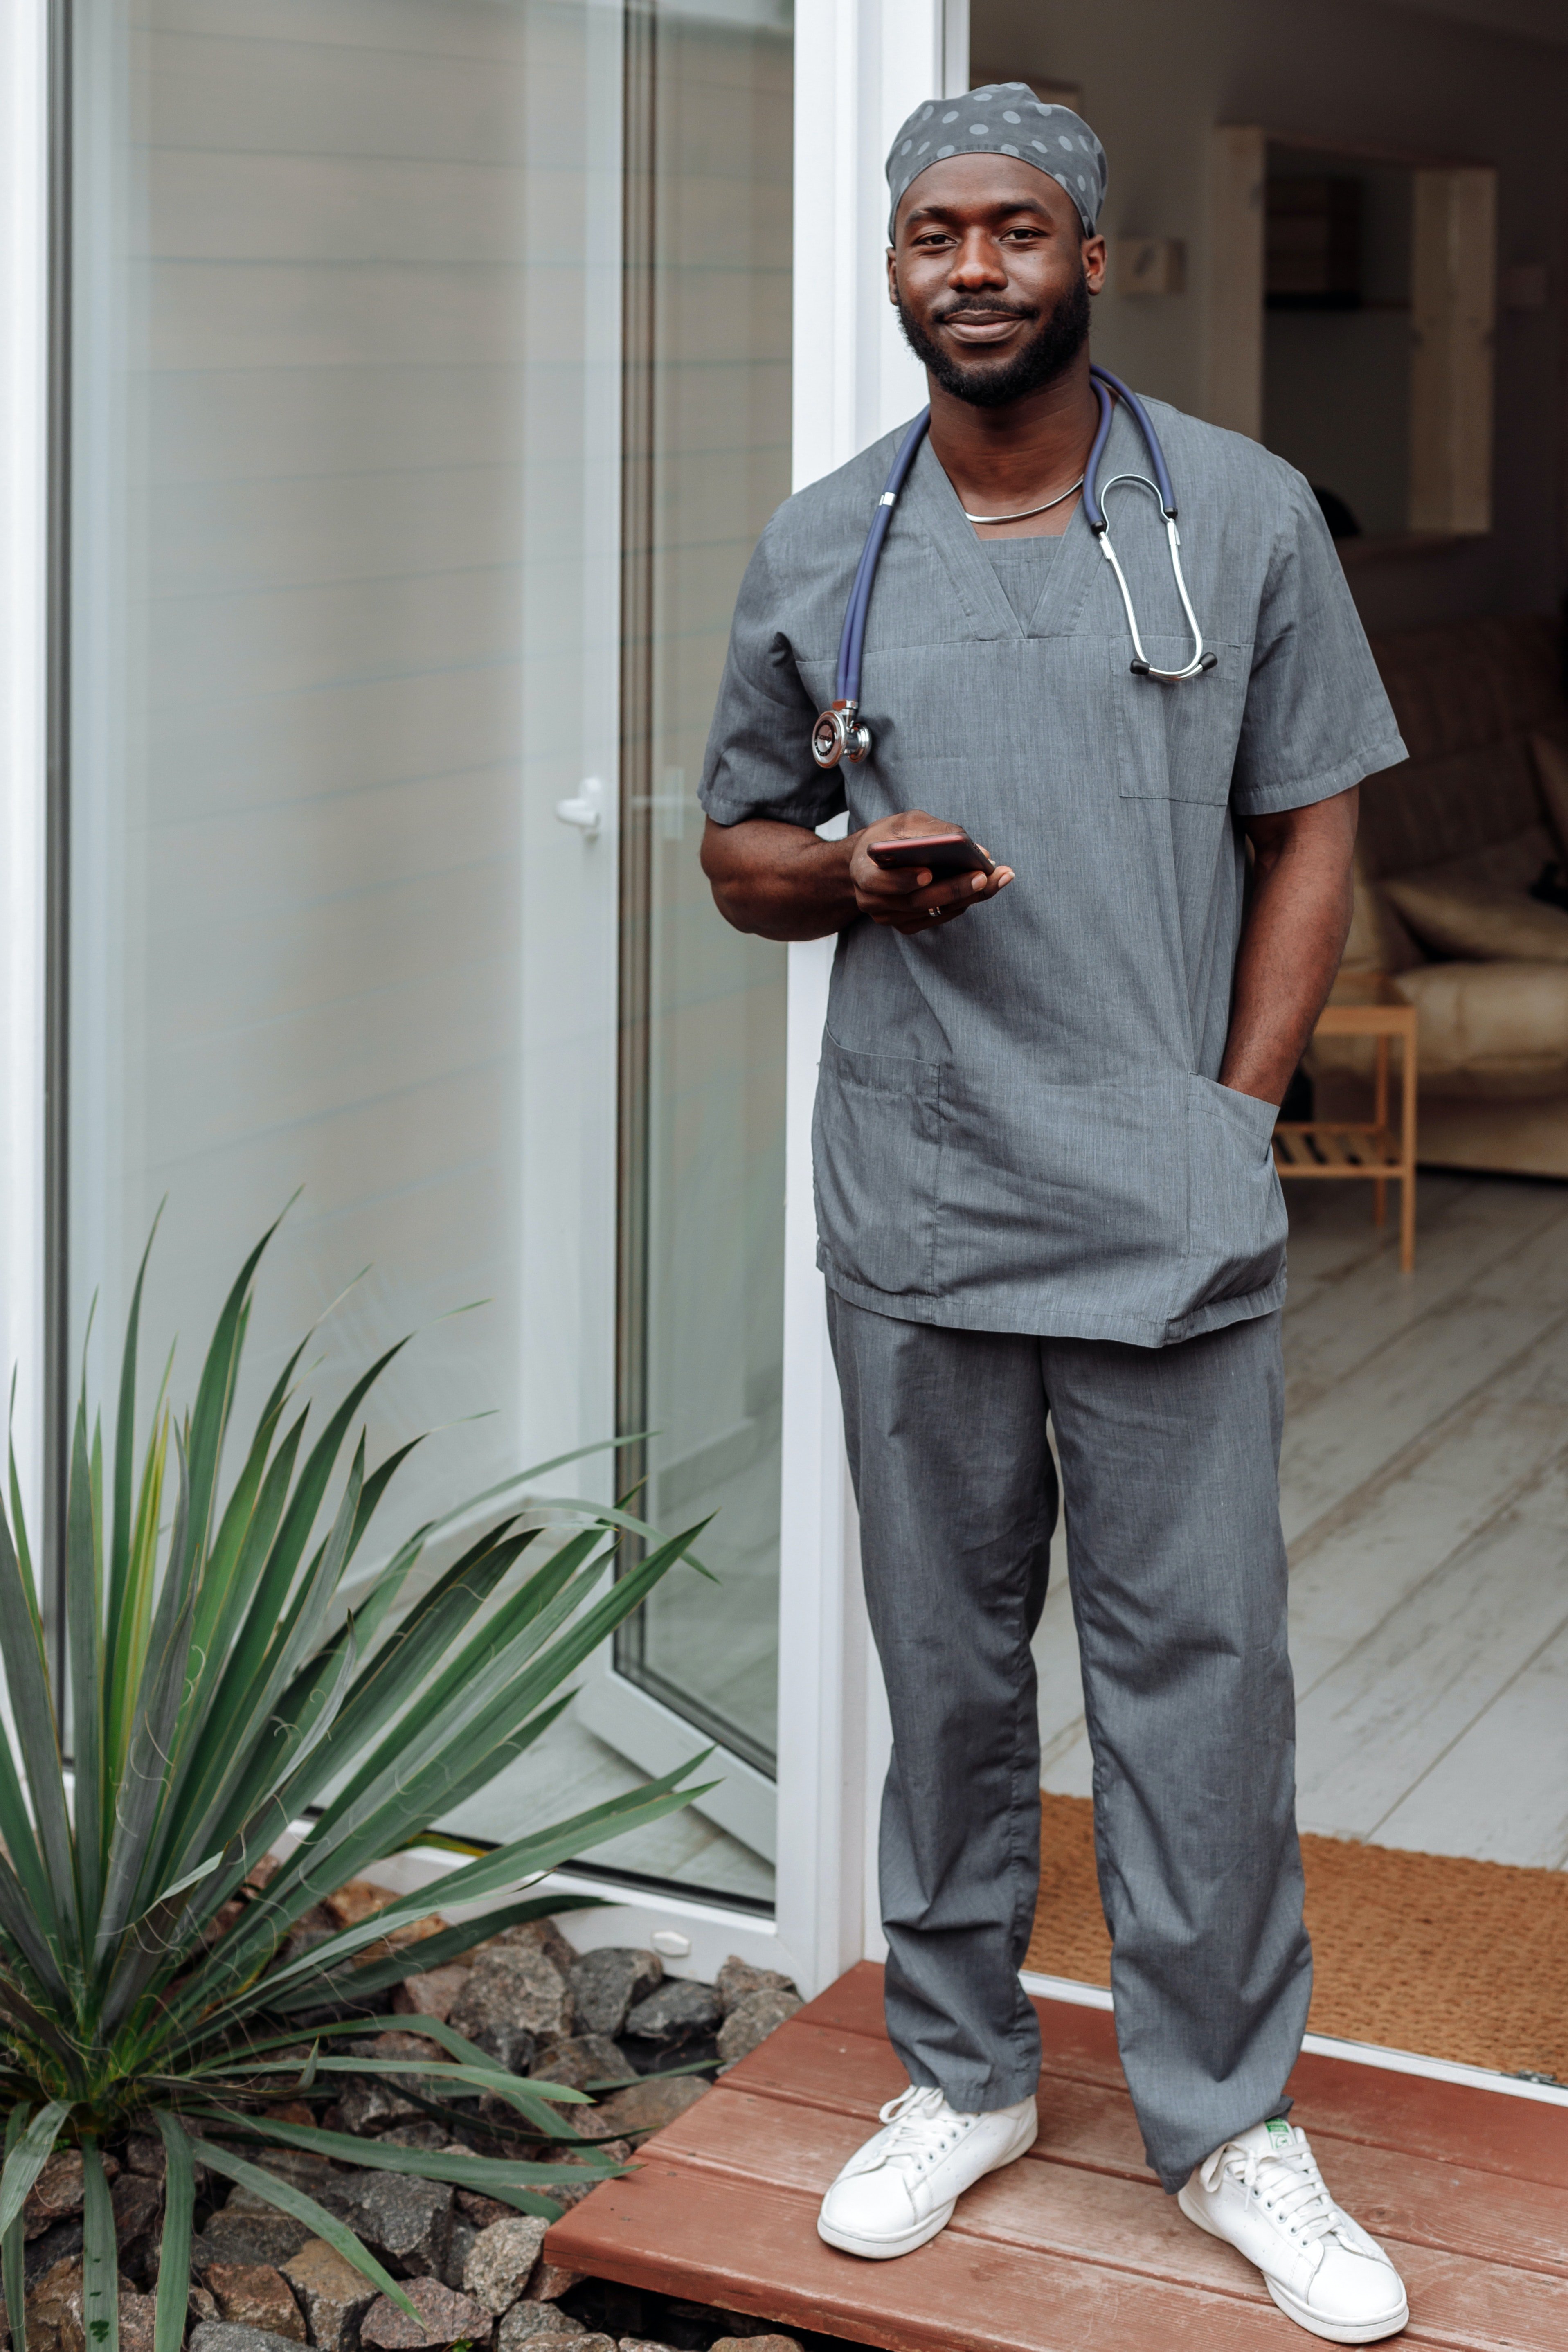 A doctor in grey uniform. | Photo: Pexels/Thirdman